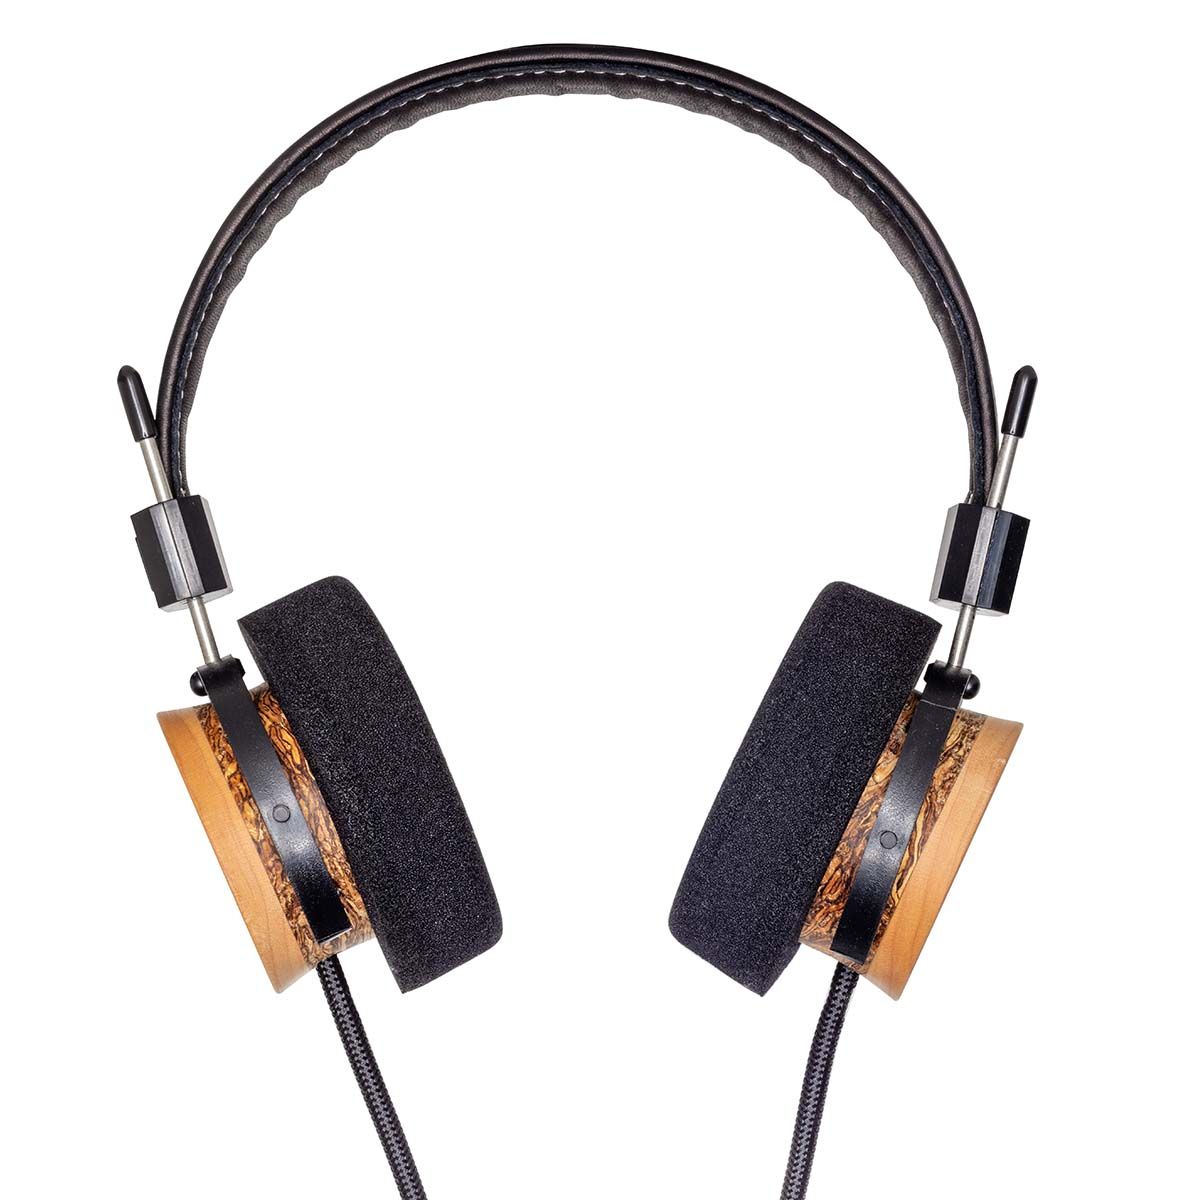 Grado RS2x On-Ear Headphones, front view